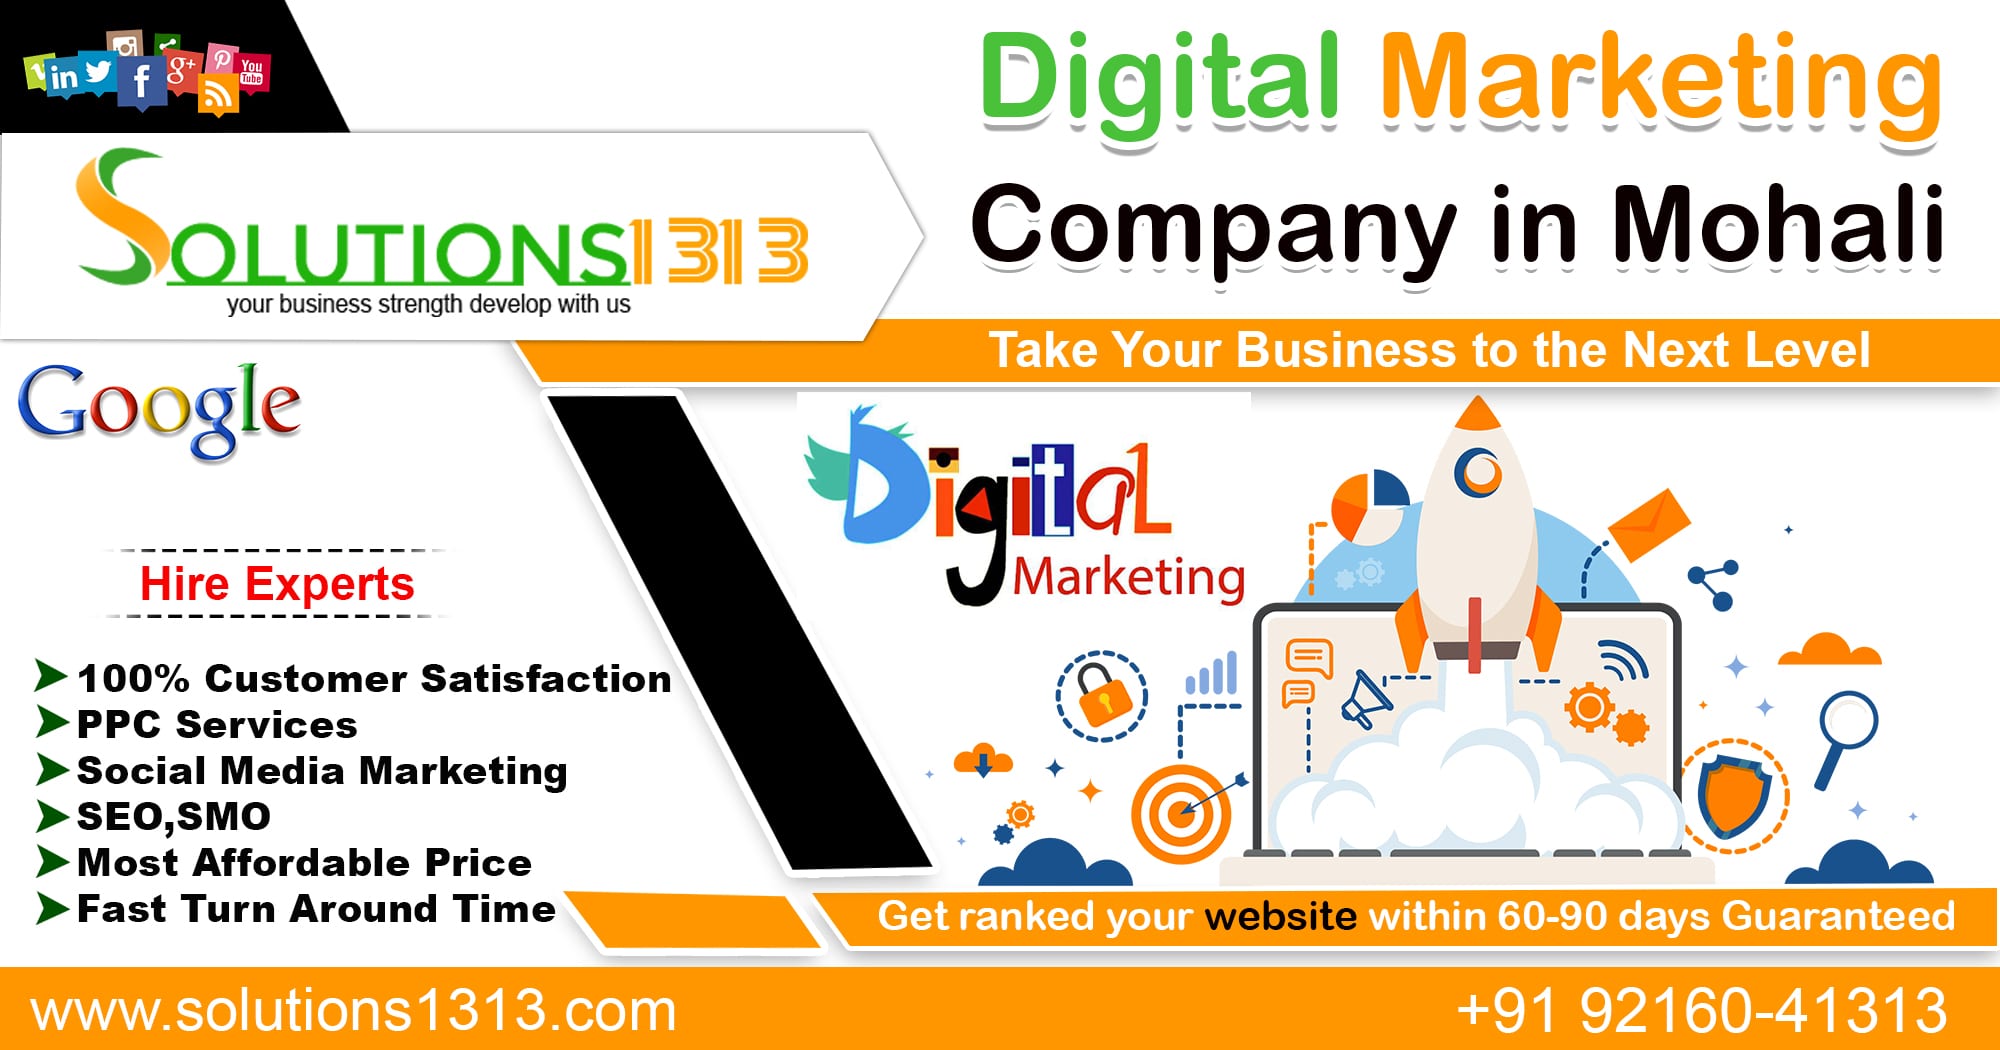 Digital Marketing Company in Mohali | Dial +91 9216041313